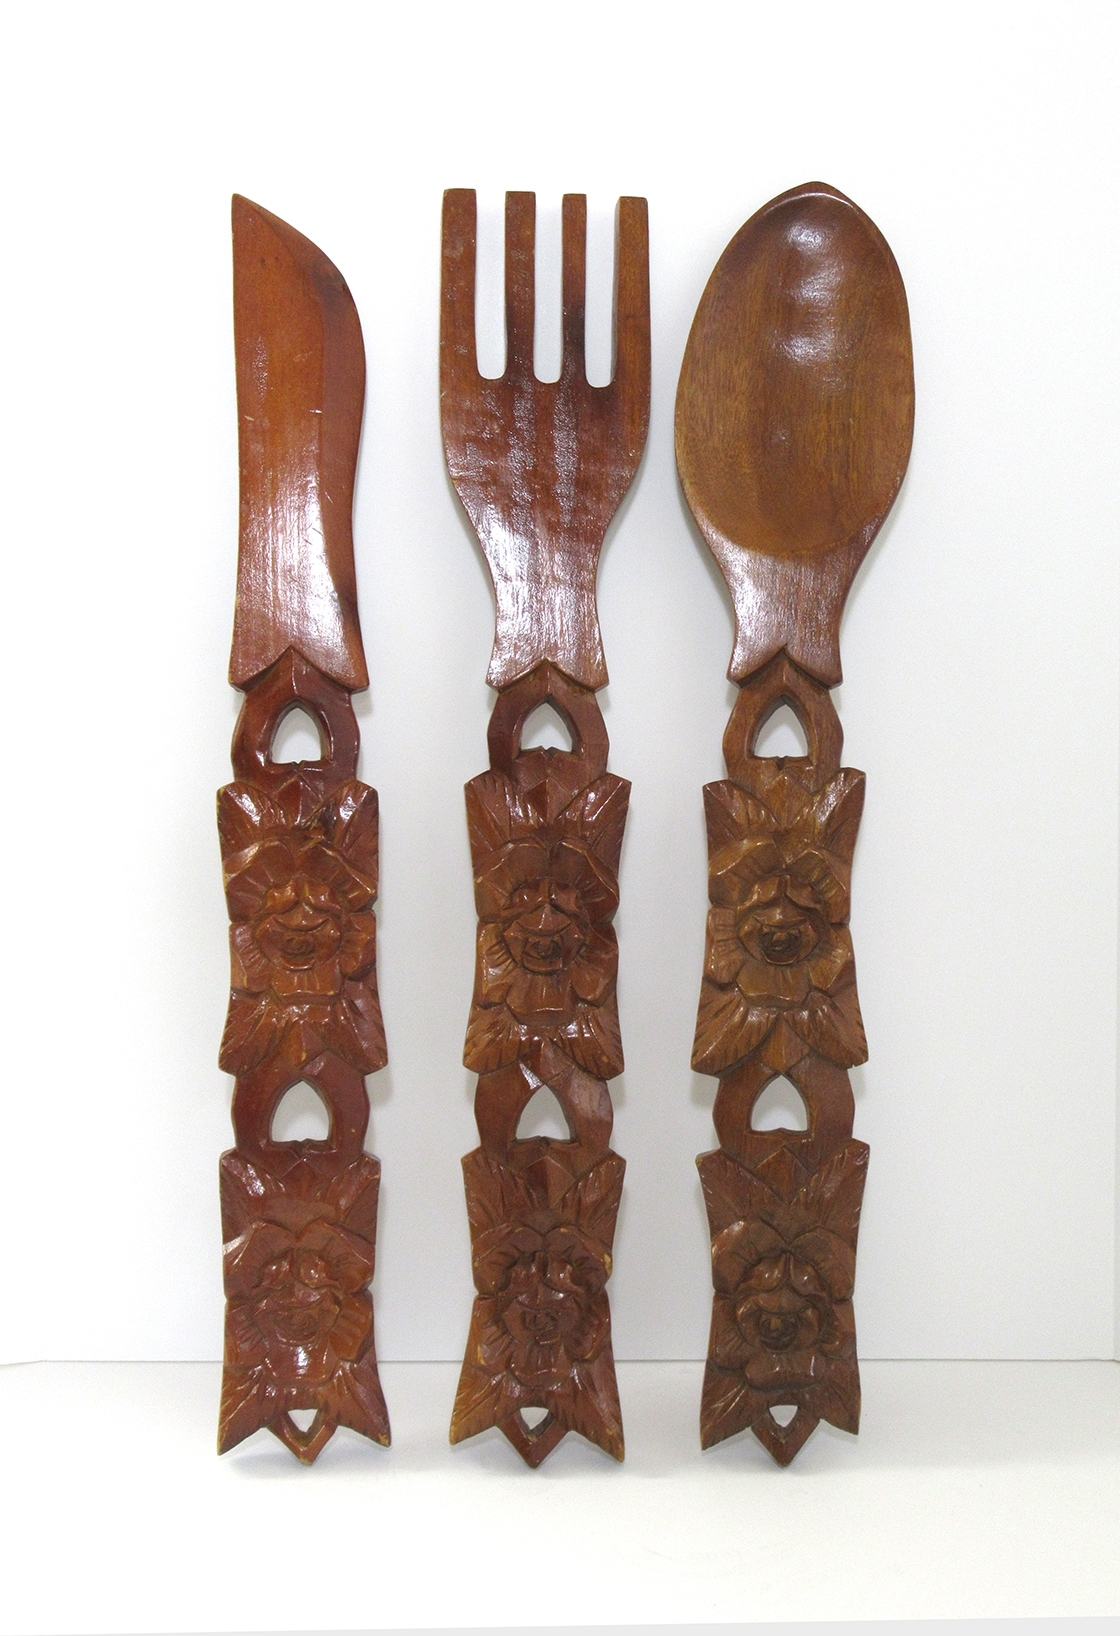 Huge Vintage Wall Art Fork Knife & Spoon in Hand-Carved Wood